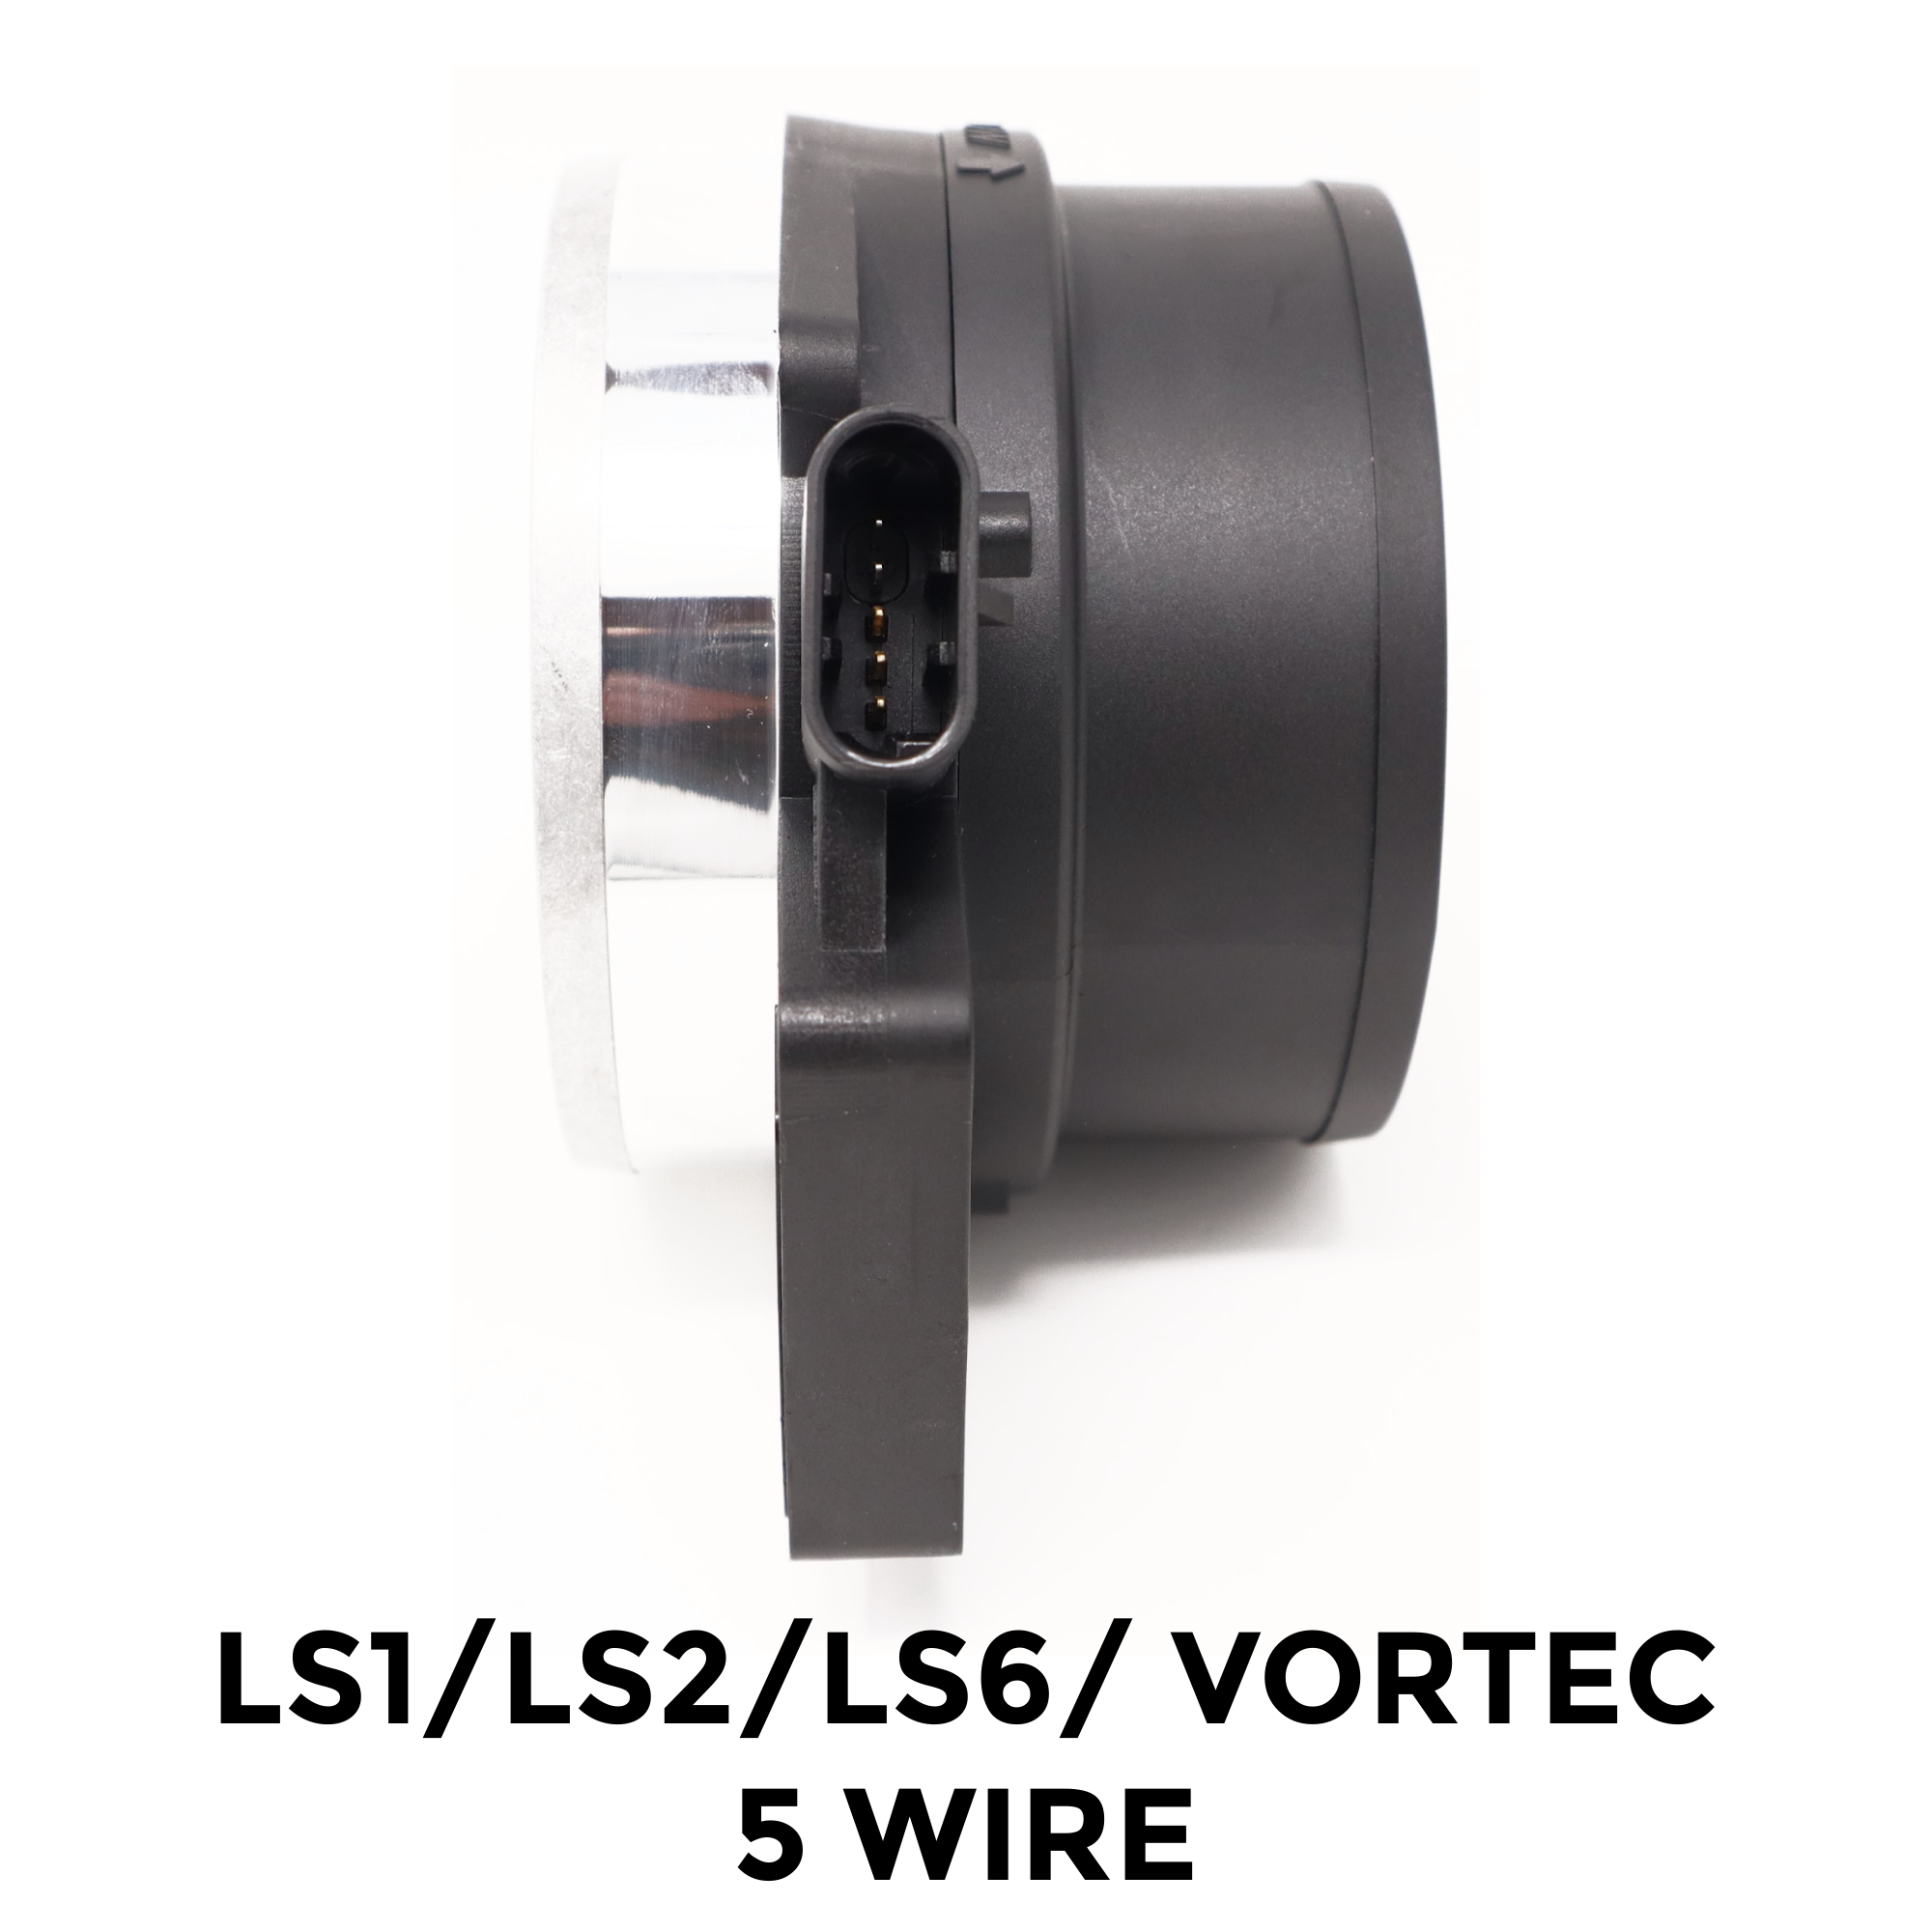 Vortec/LS6/LS2 5 Wire